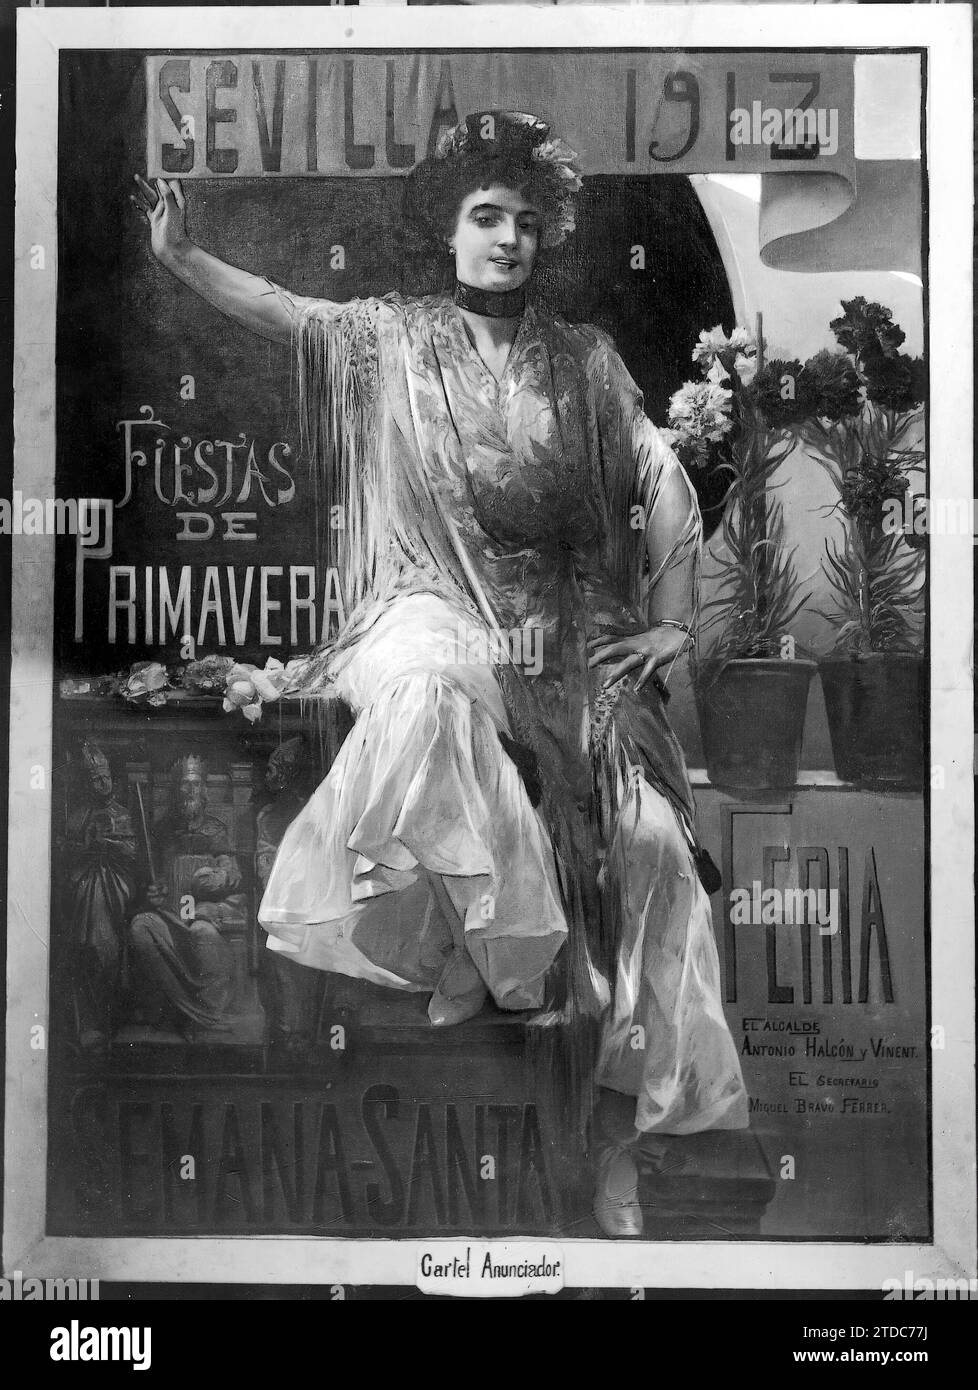 09/30/1911. Notable Poster. Poster of the Seville Fair, original by the illustrious artist D. José García y Ramos. Credit: Album / Archivo ABC / Dubois Stock Photo